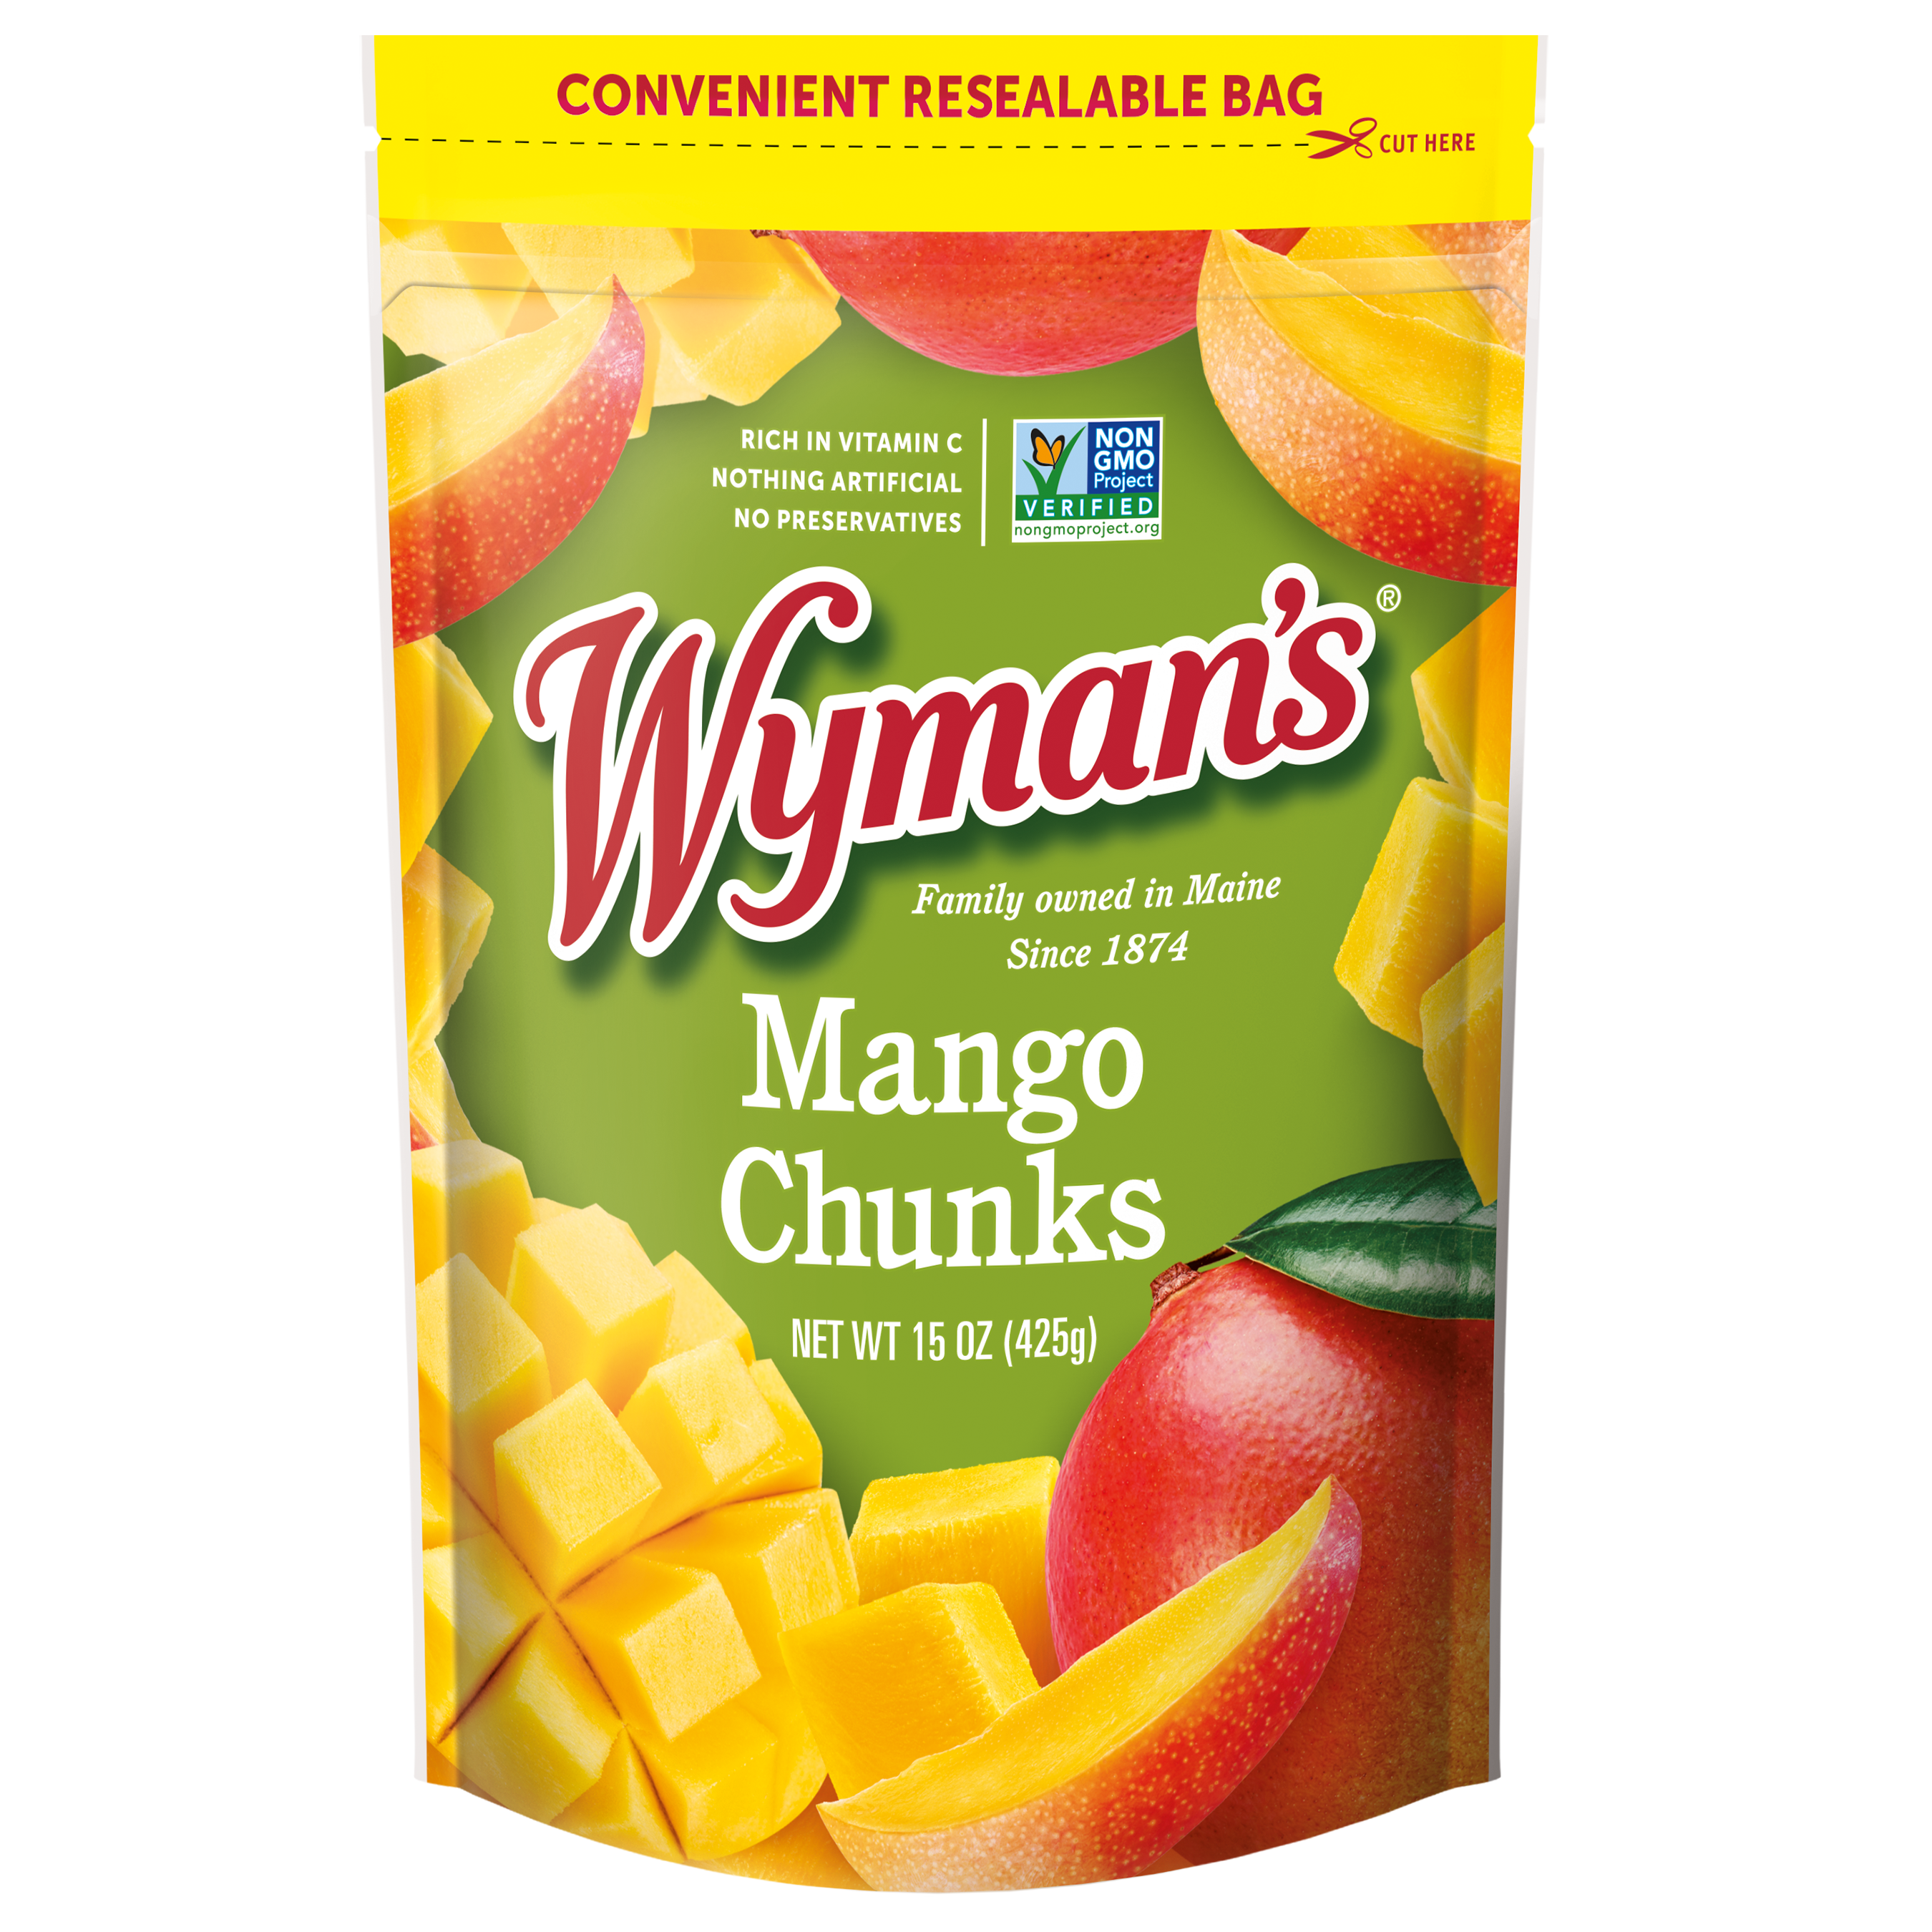 A bag of fresh-frozen Shop Wyman's Mango Chunks.